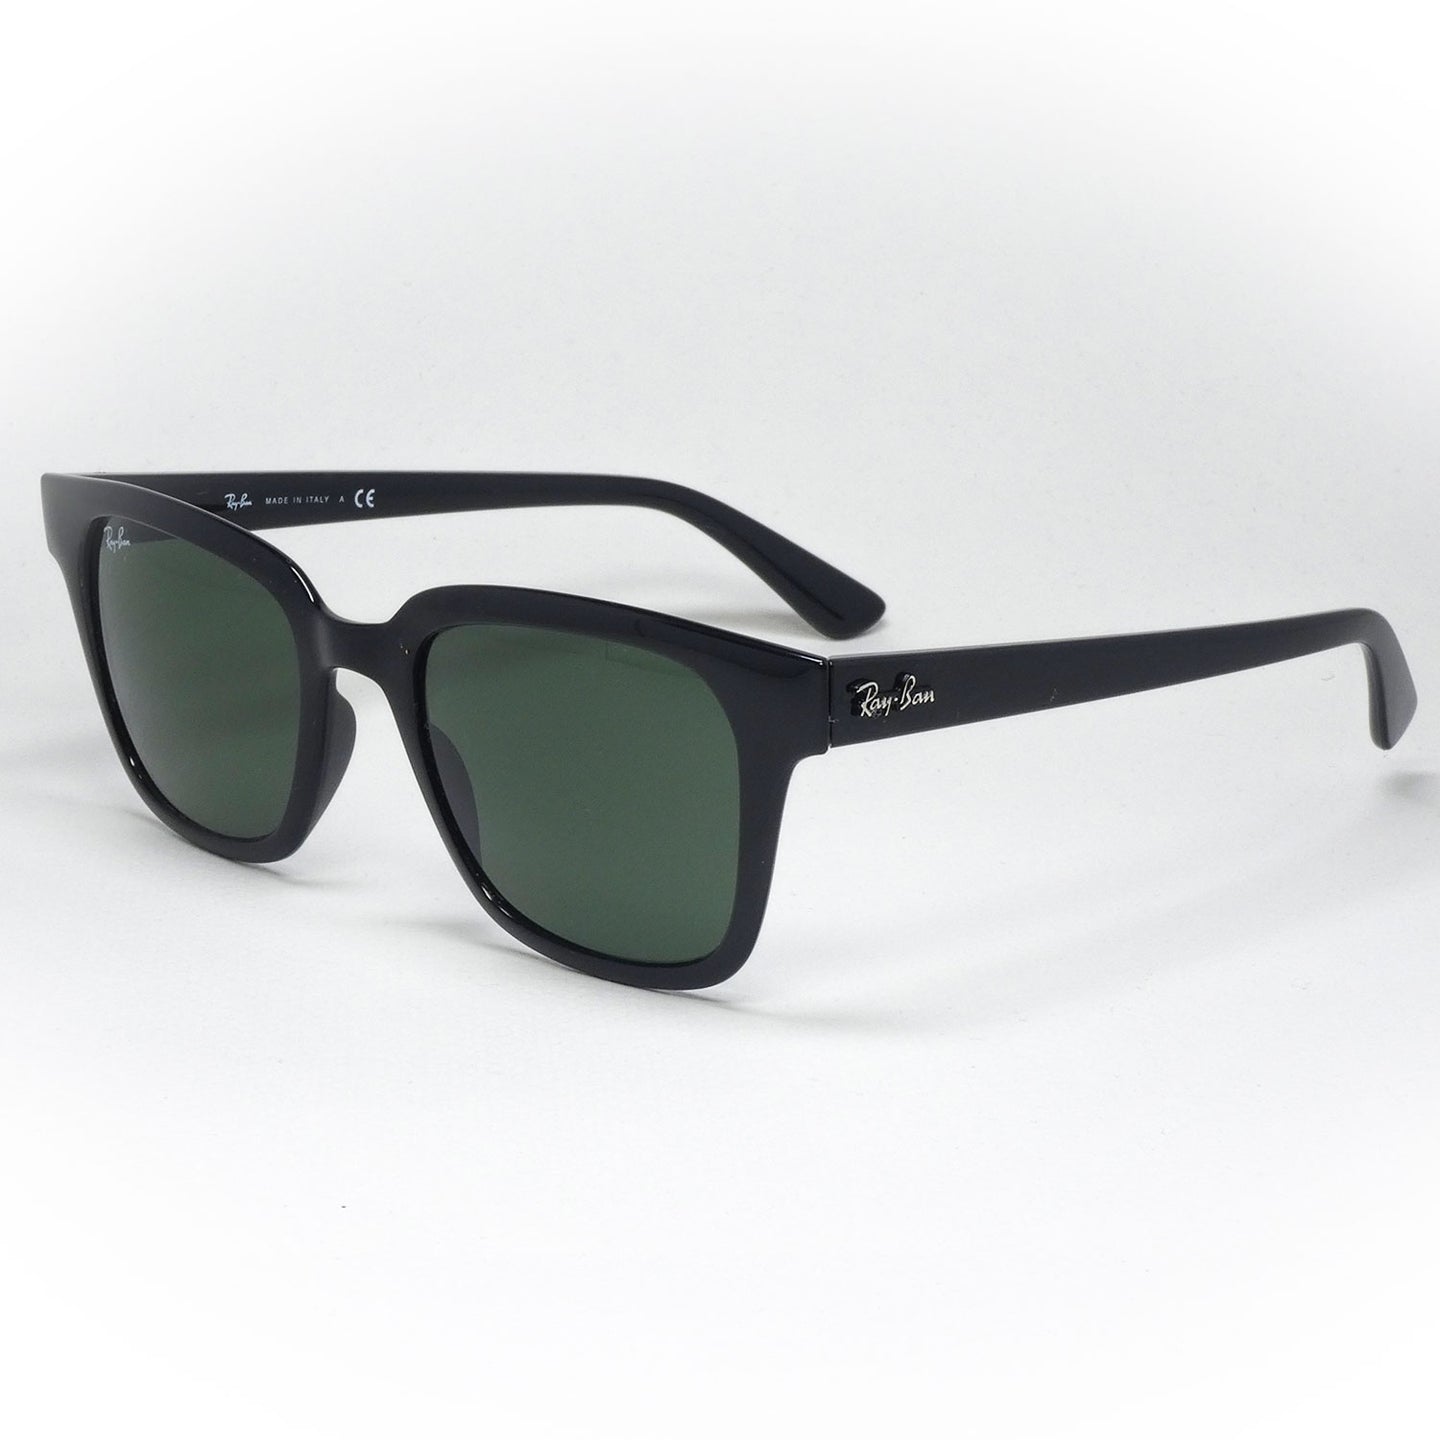 sunglasses ray ban rb 4323 color 601/31 angled view